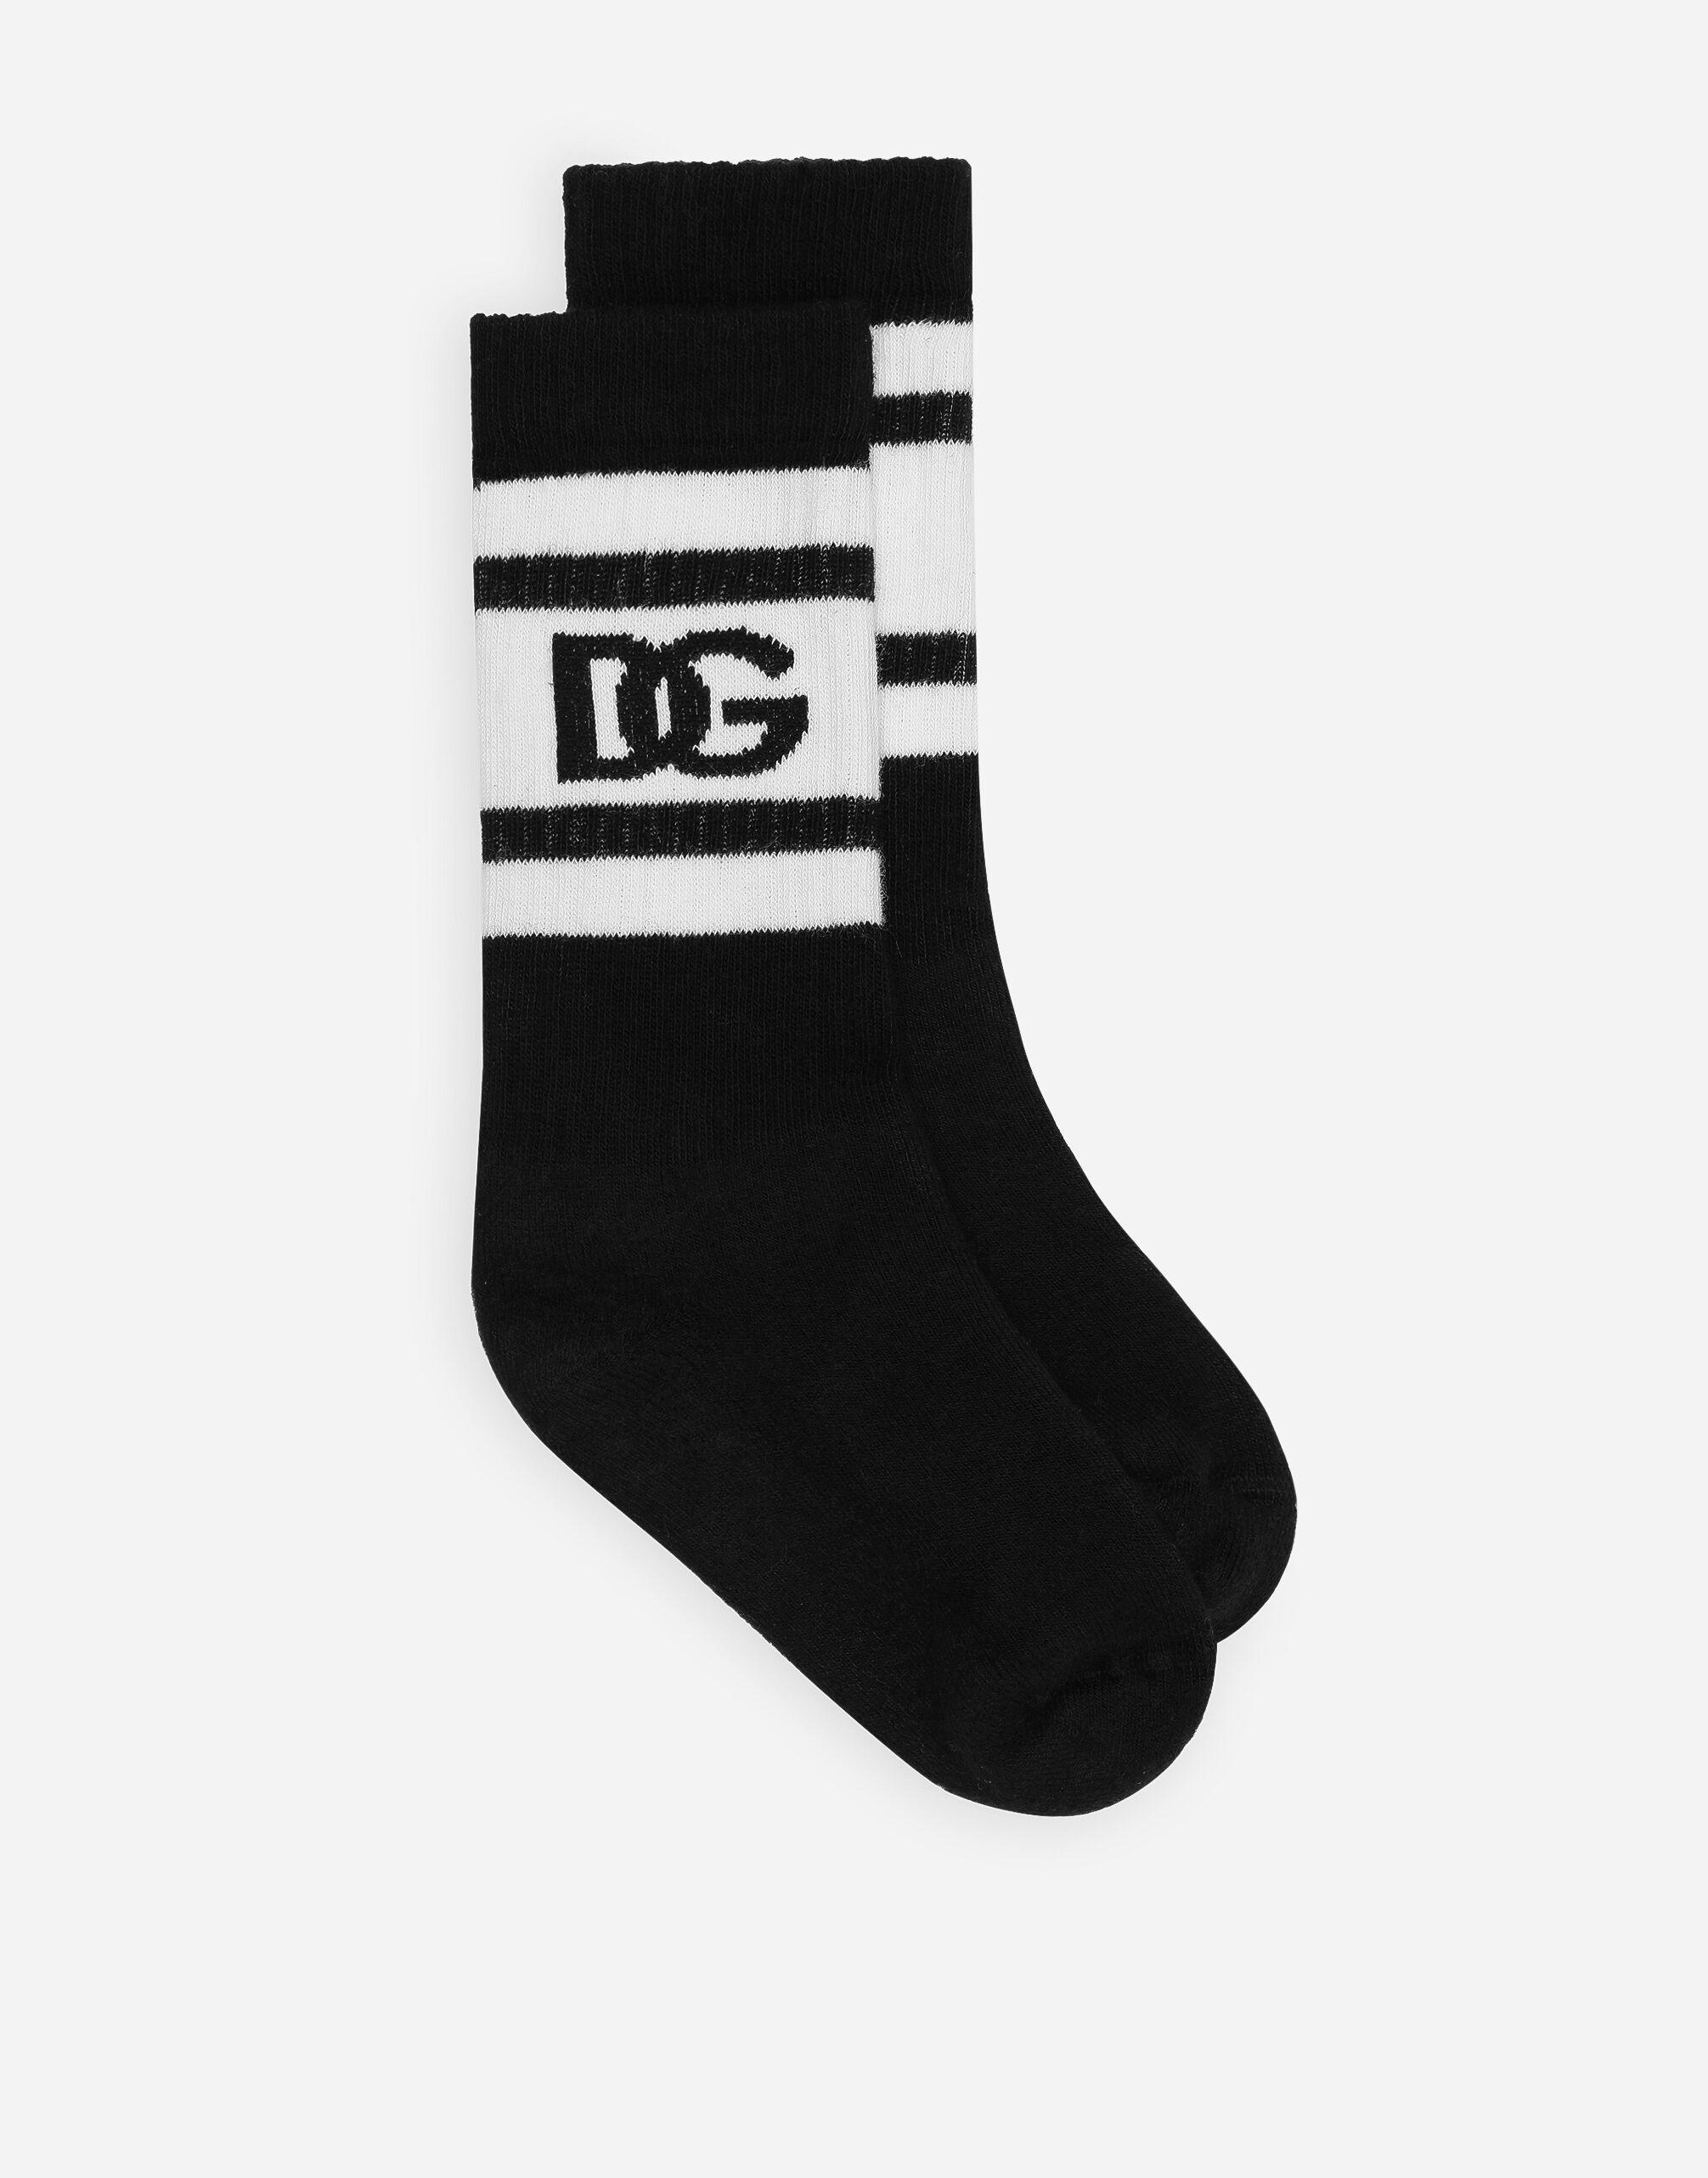 Dolce & Gabbana Cotton socks with DG logo Black EM0096AB124